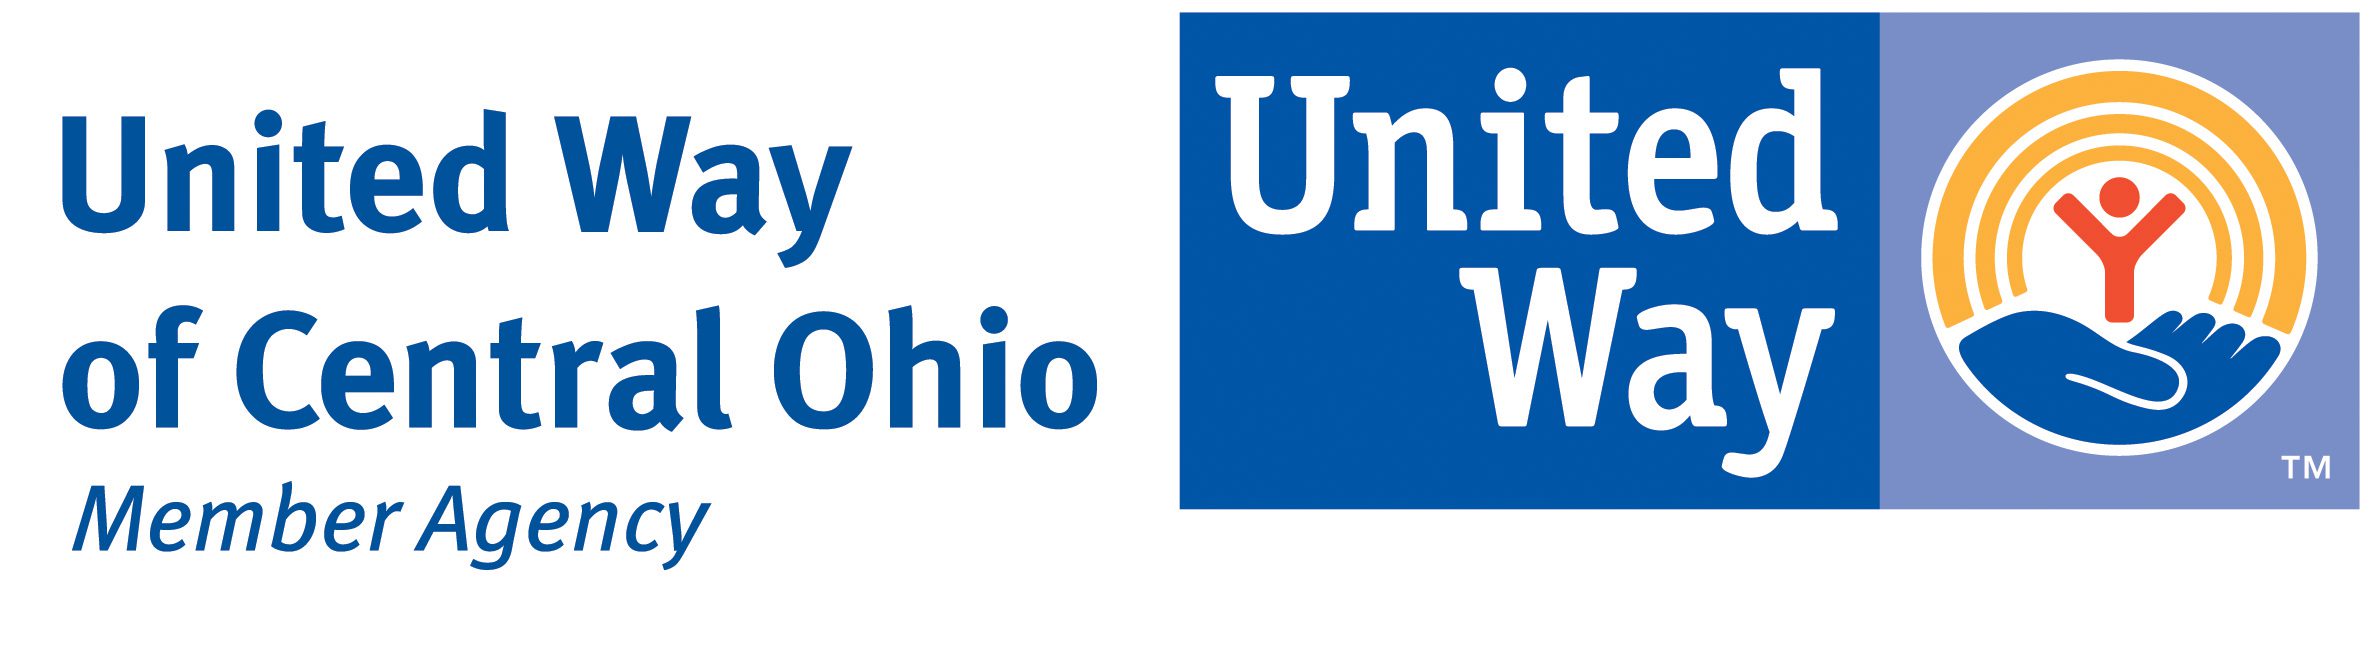 Central Ohio United Way logo